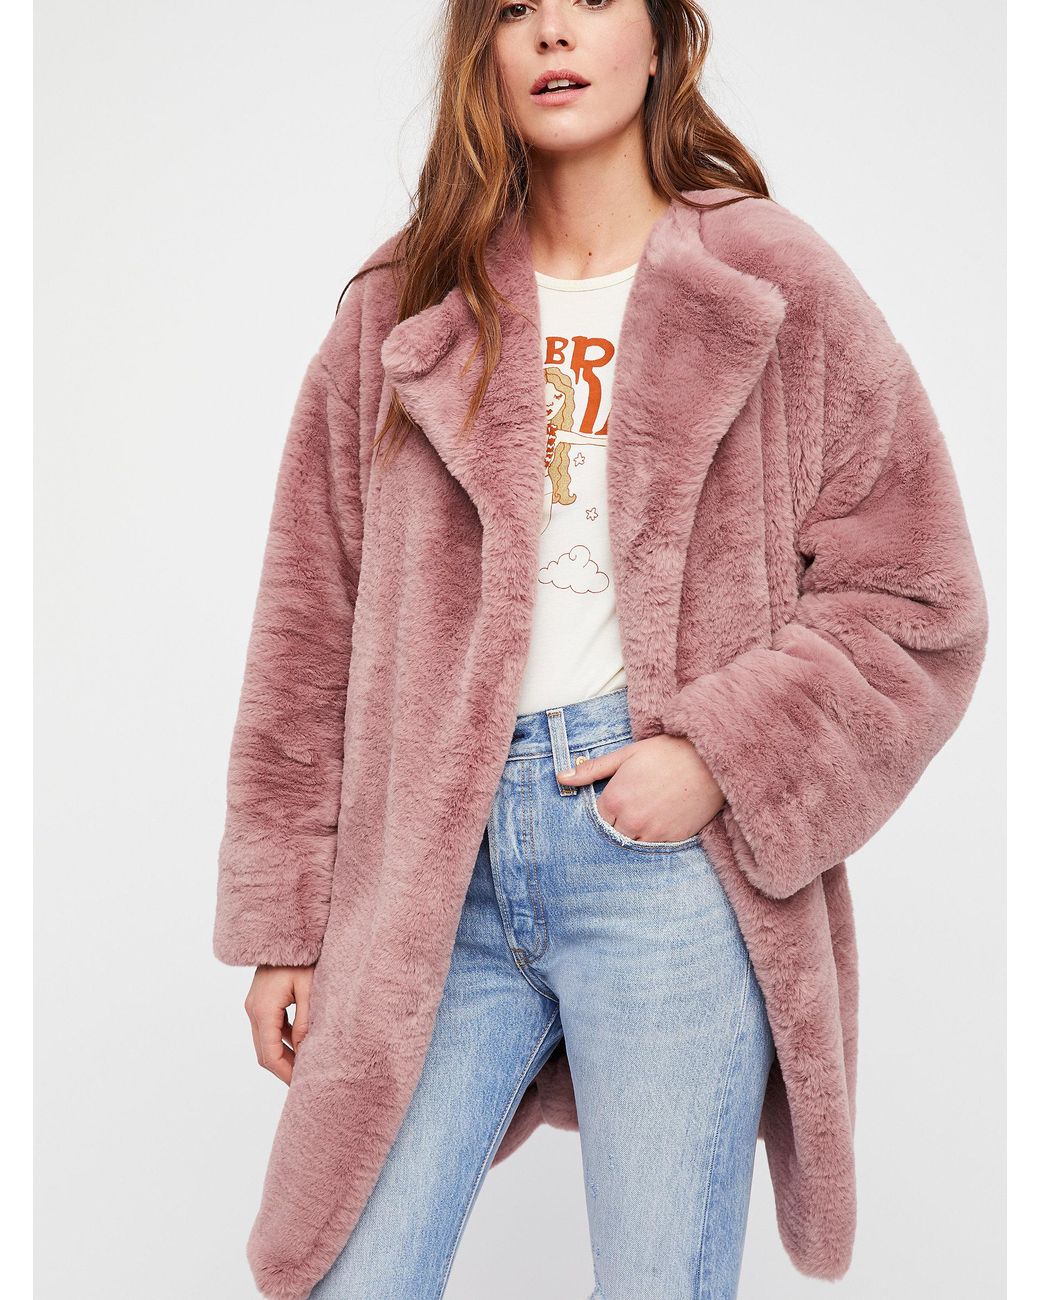 Free People Rita Fur Coat in Pink | Lyst